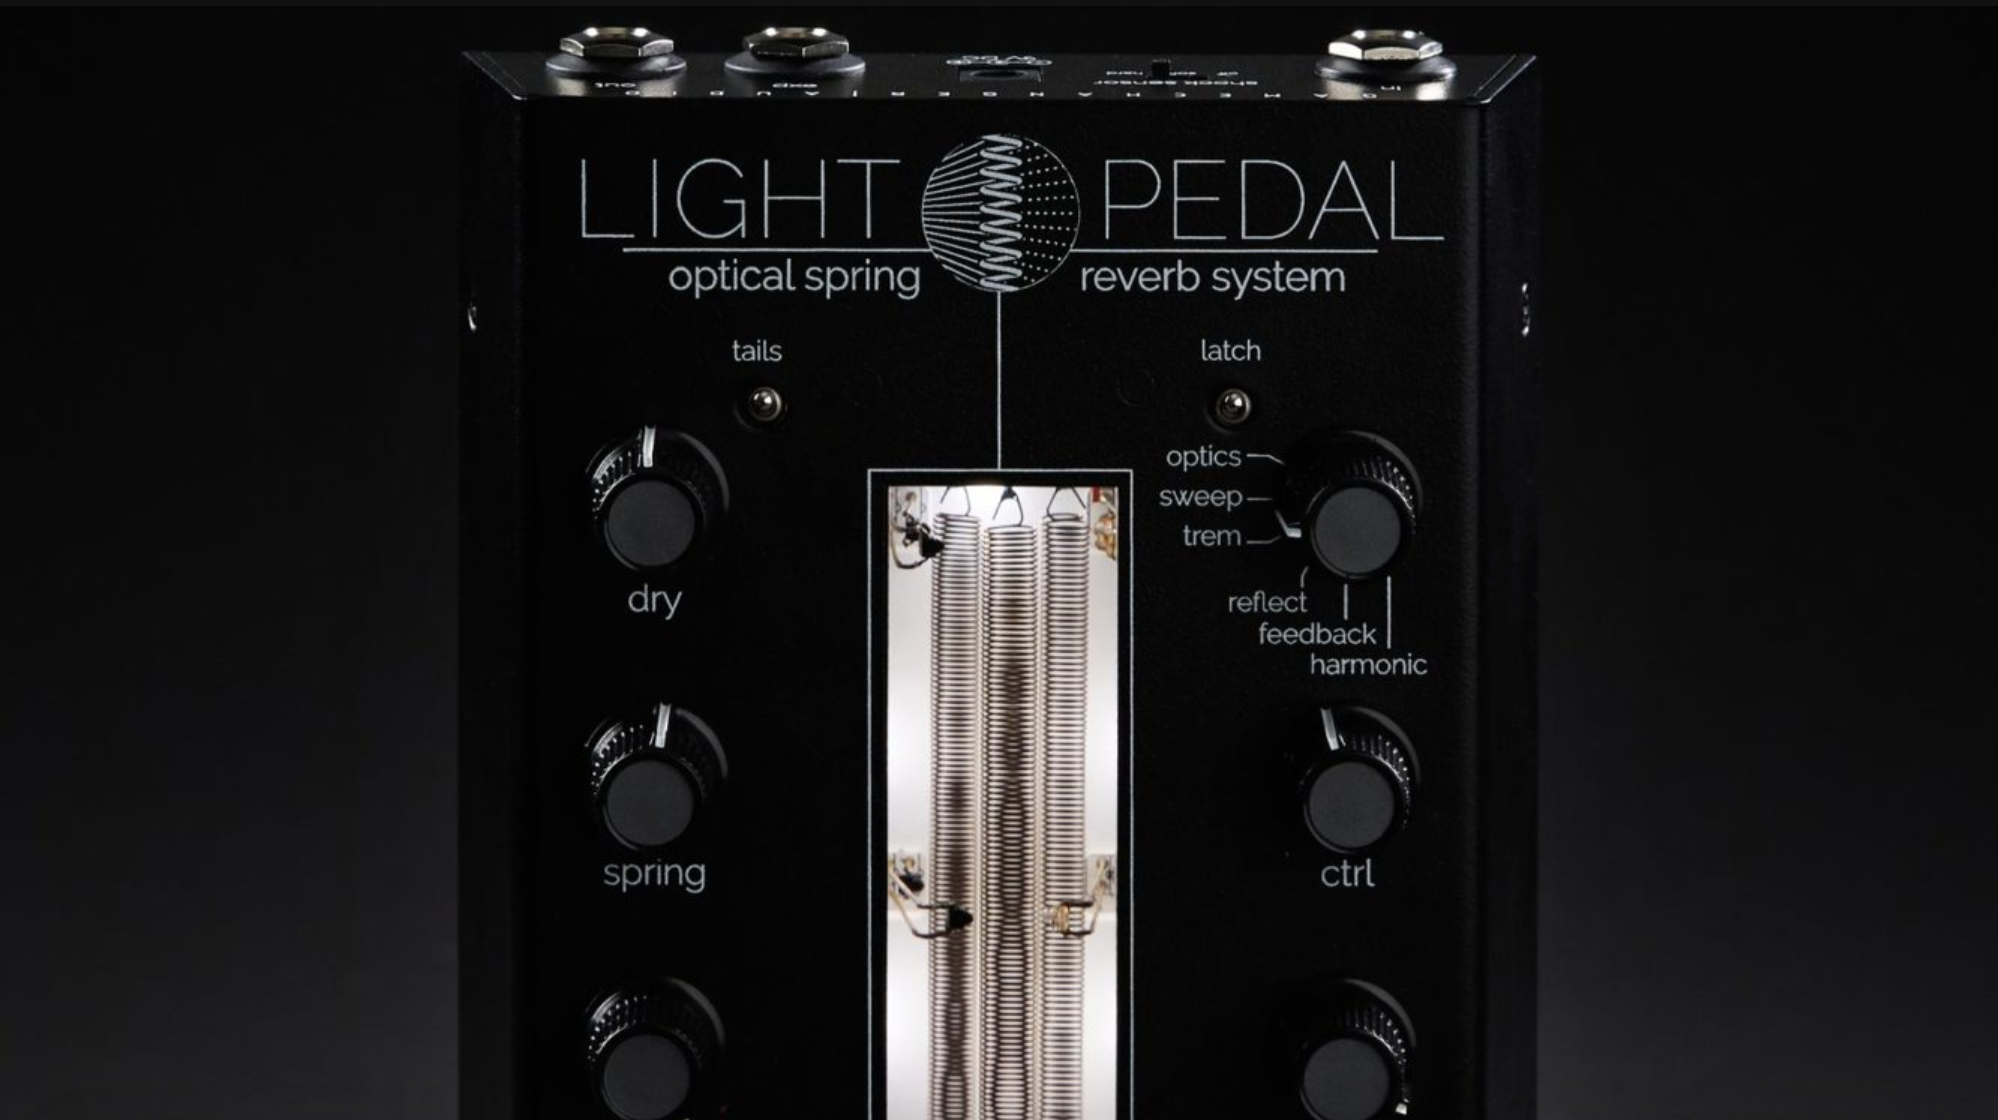 Gamechanger Audio introduces an optical spring reverb pedal | DeviceDaily.com